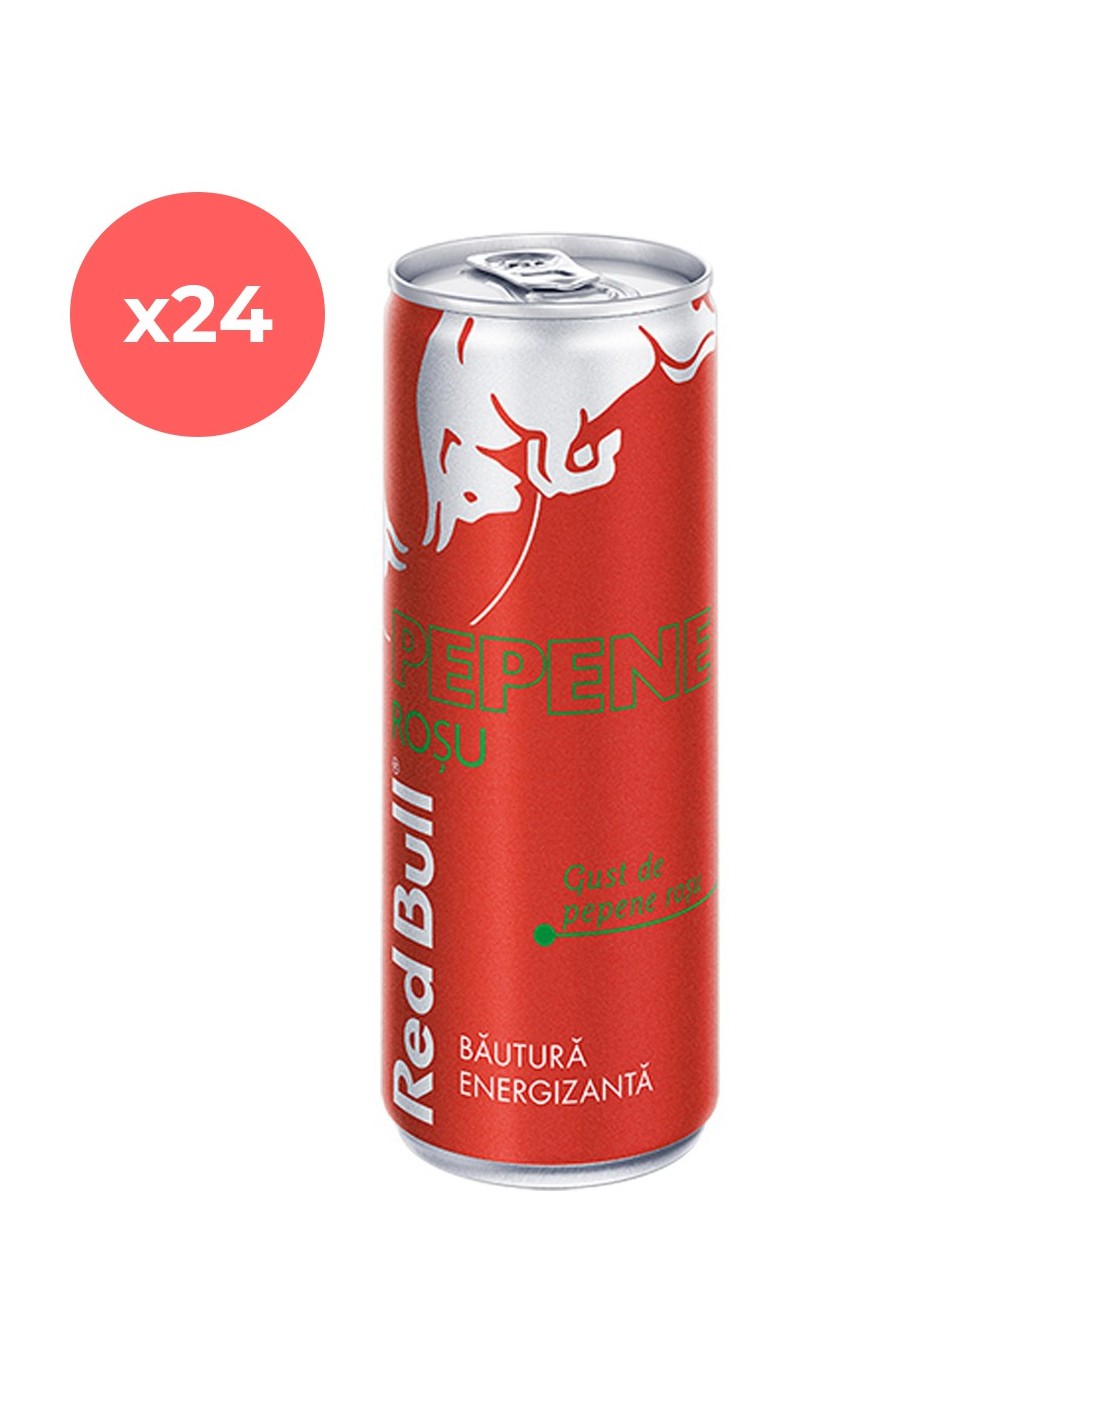 Bax 24 bucati Energizant Red Bull Pepene rosu, 0.25L